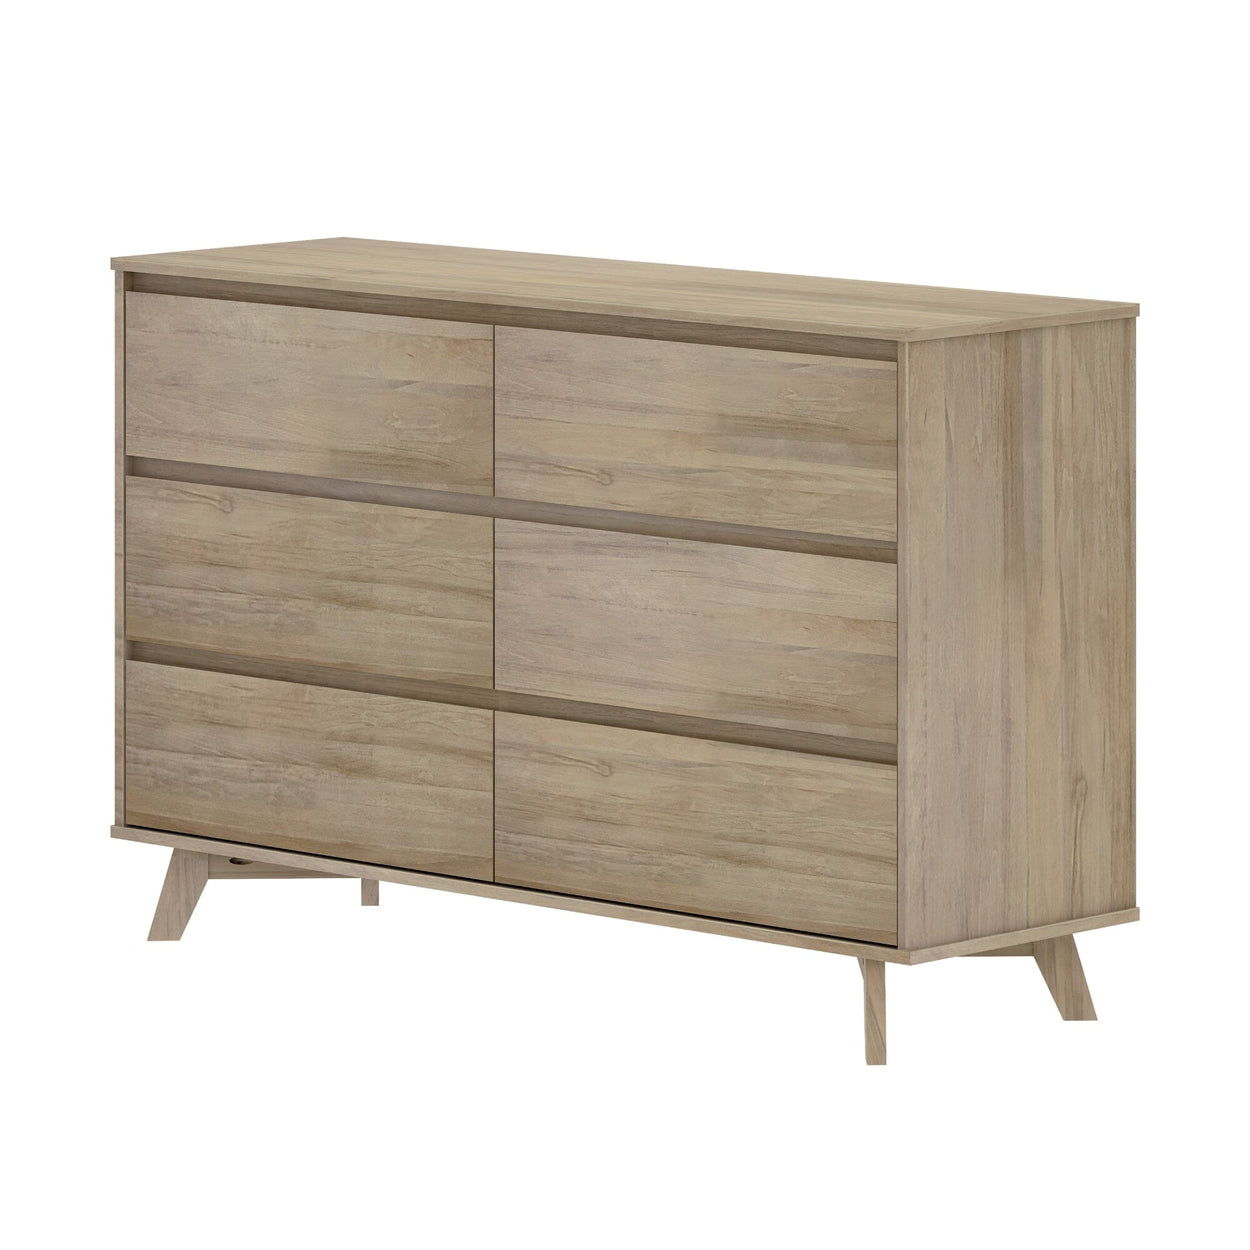 210006-010 : Furniture Scandinavian 6-Drawer Dresser, Blonde